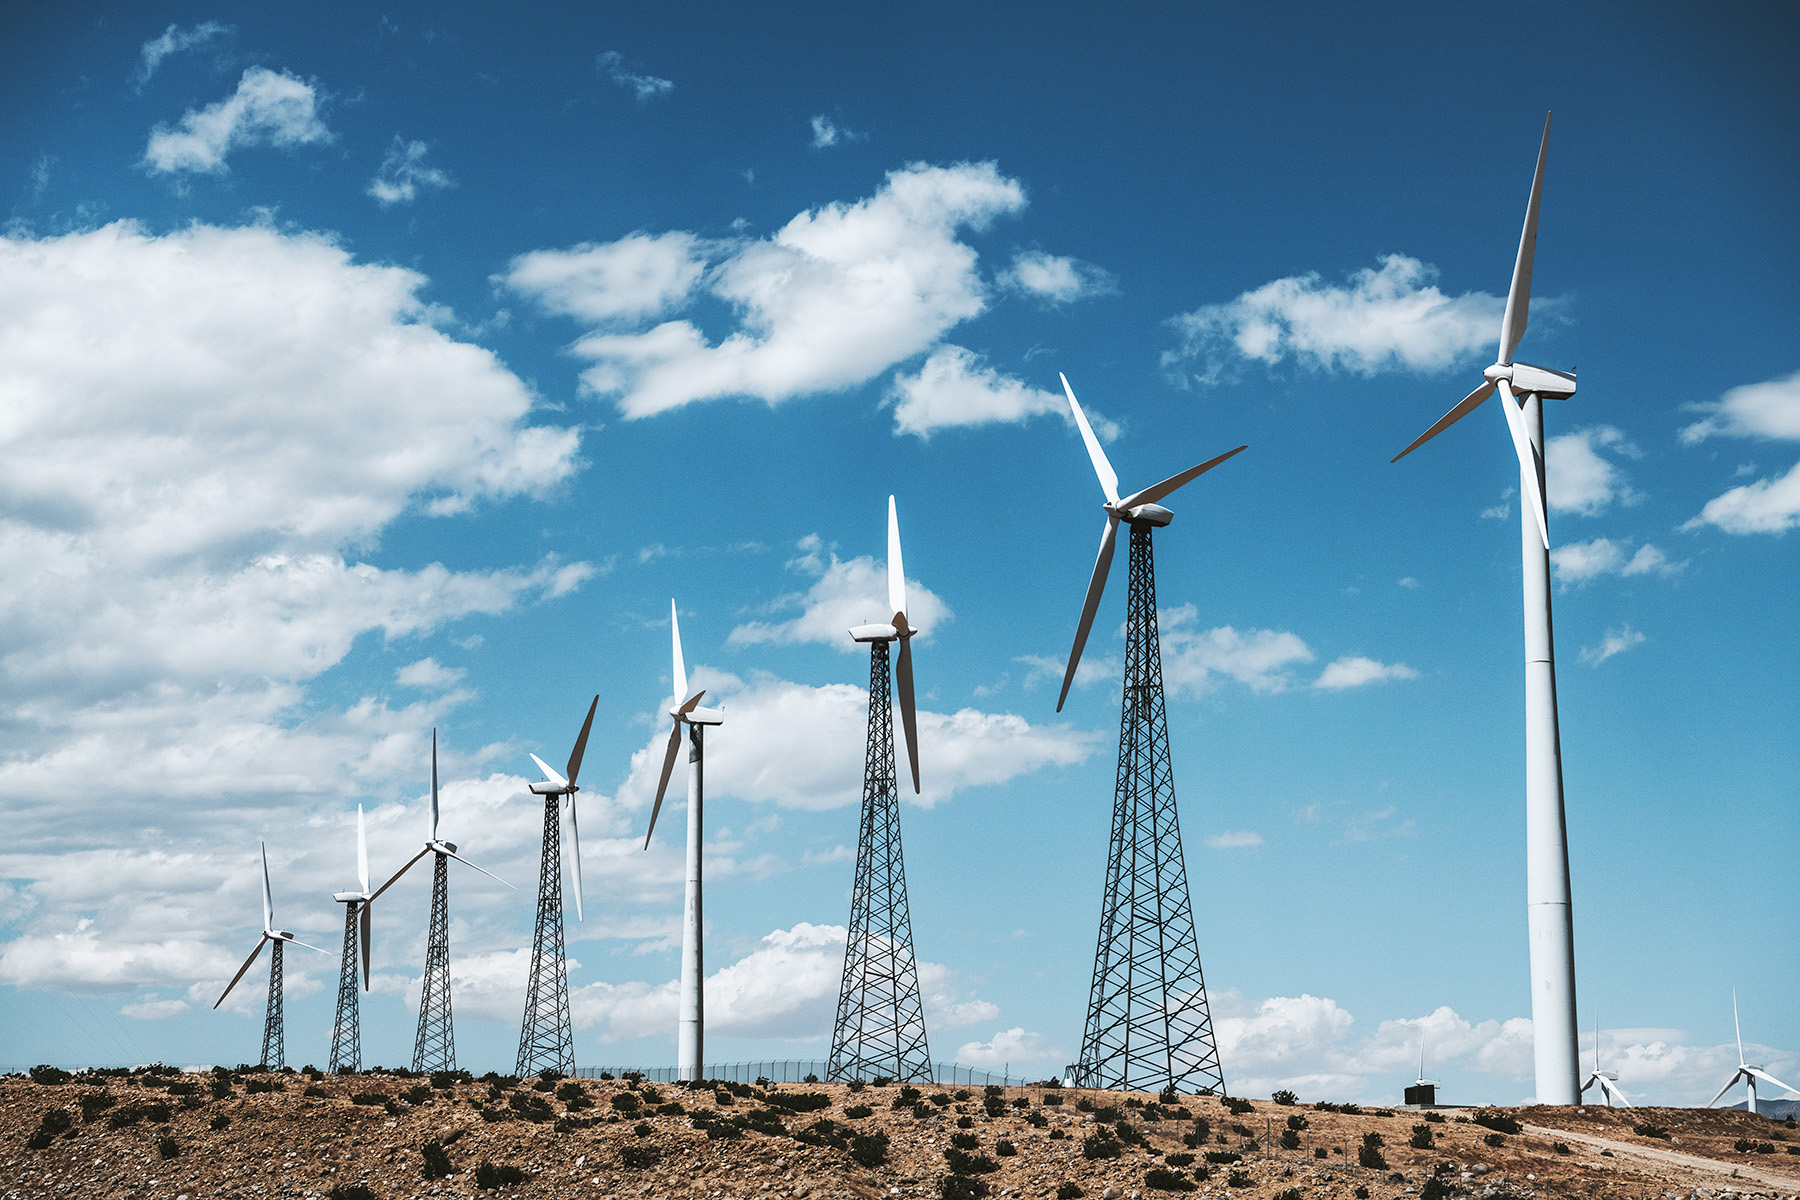 An image of a windfarm